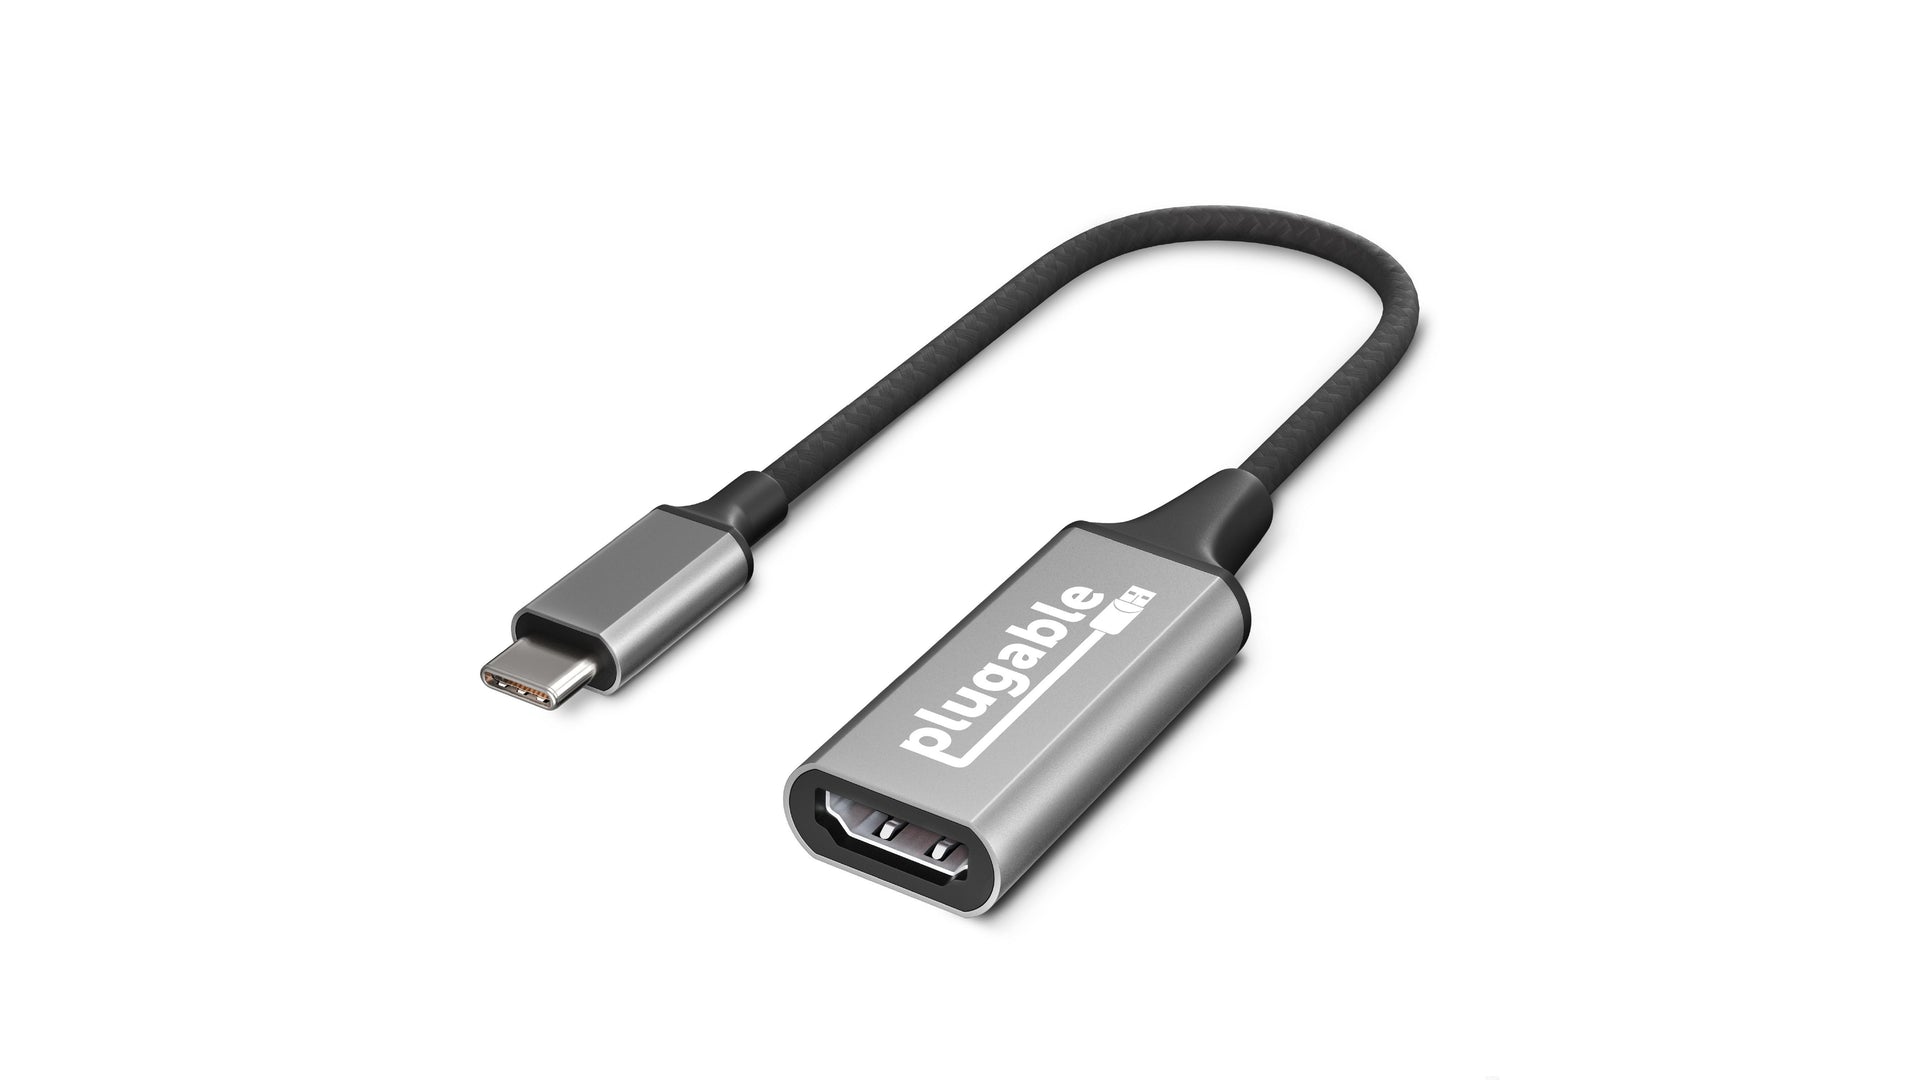 Plugable USB 3.1 HDMI 2.0 Adapter – Technologies